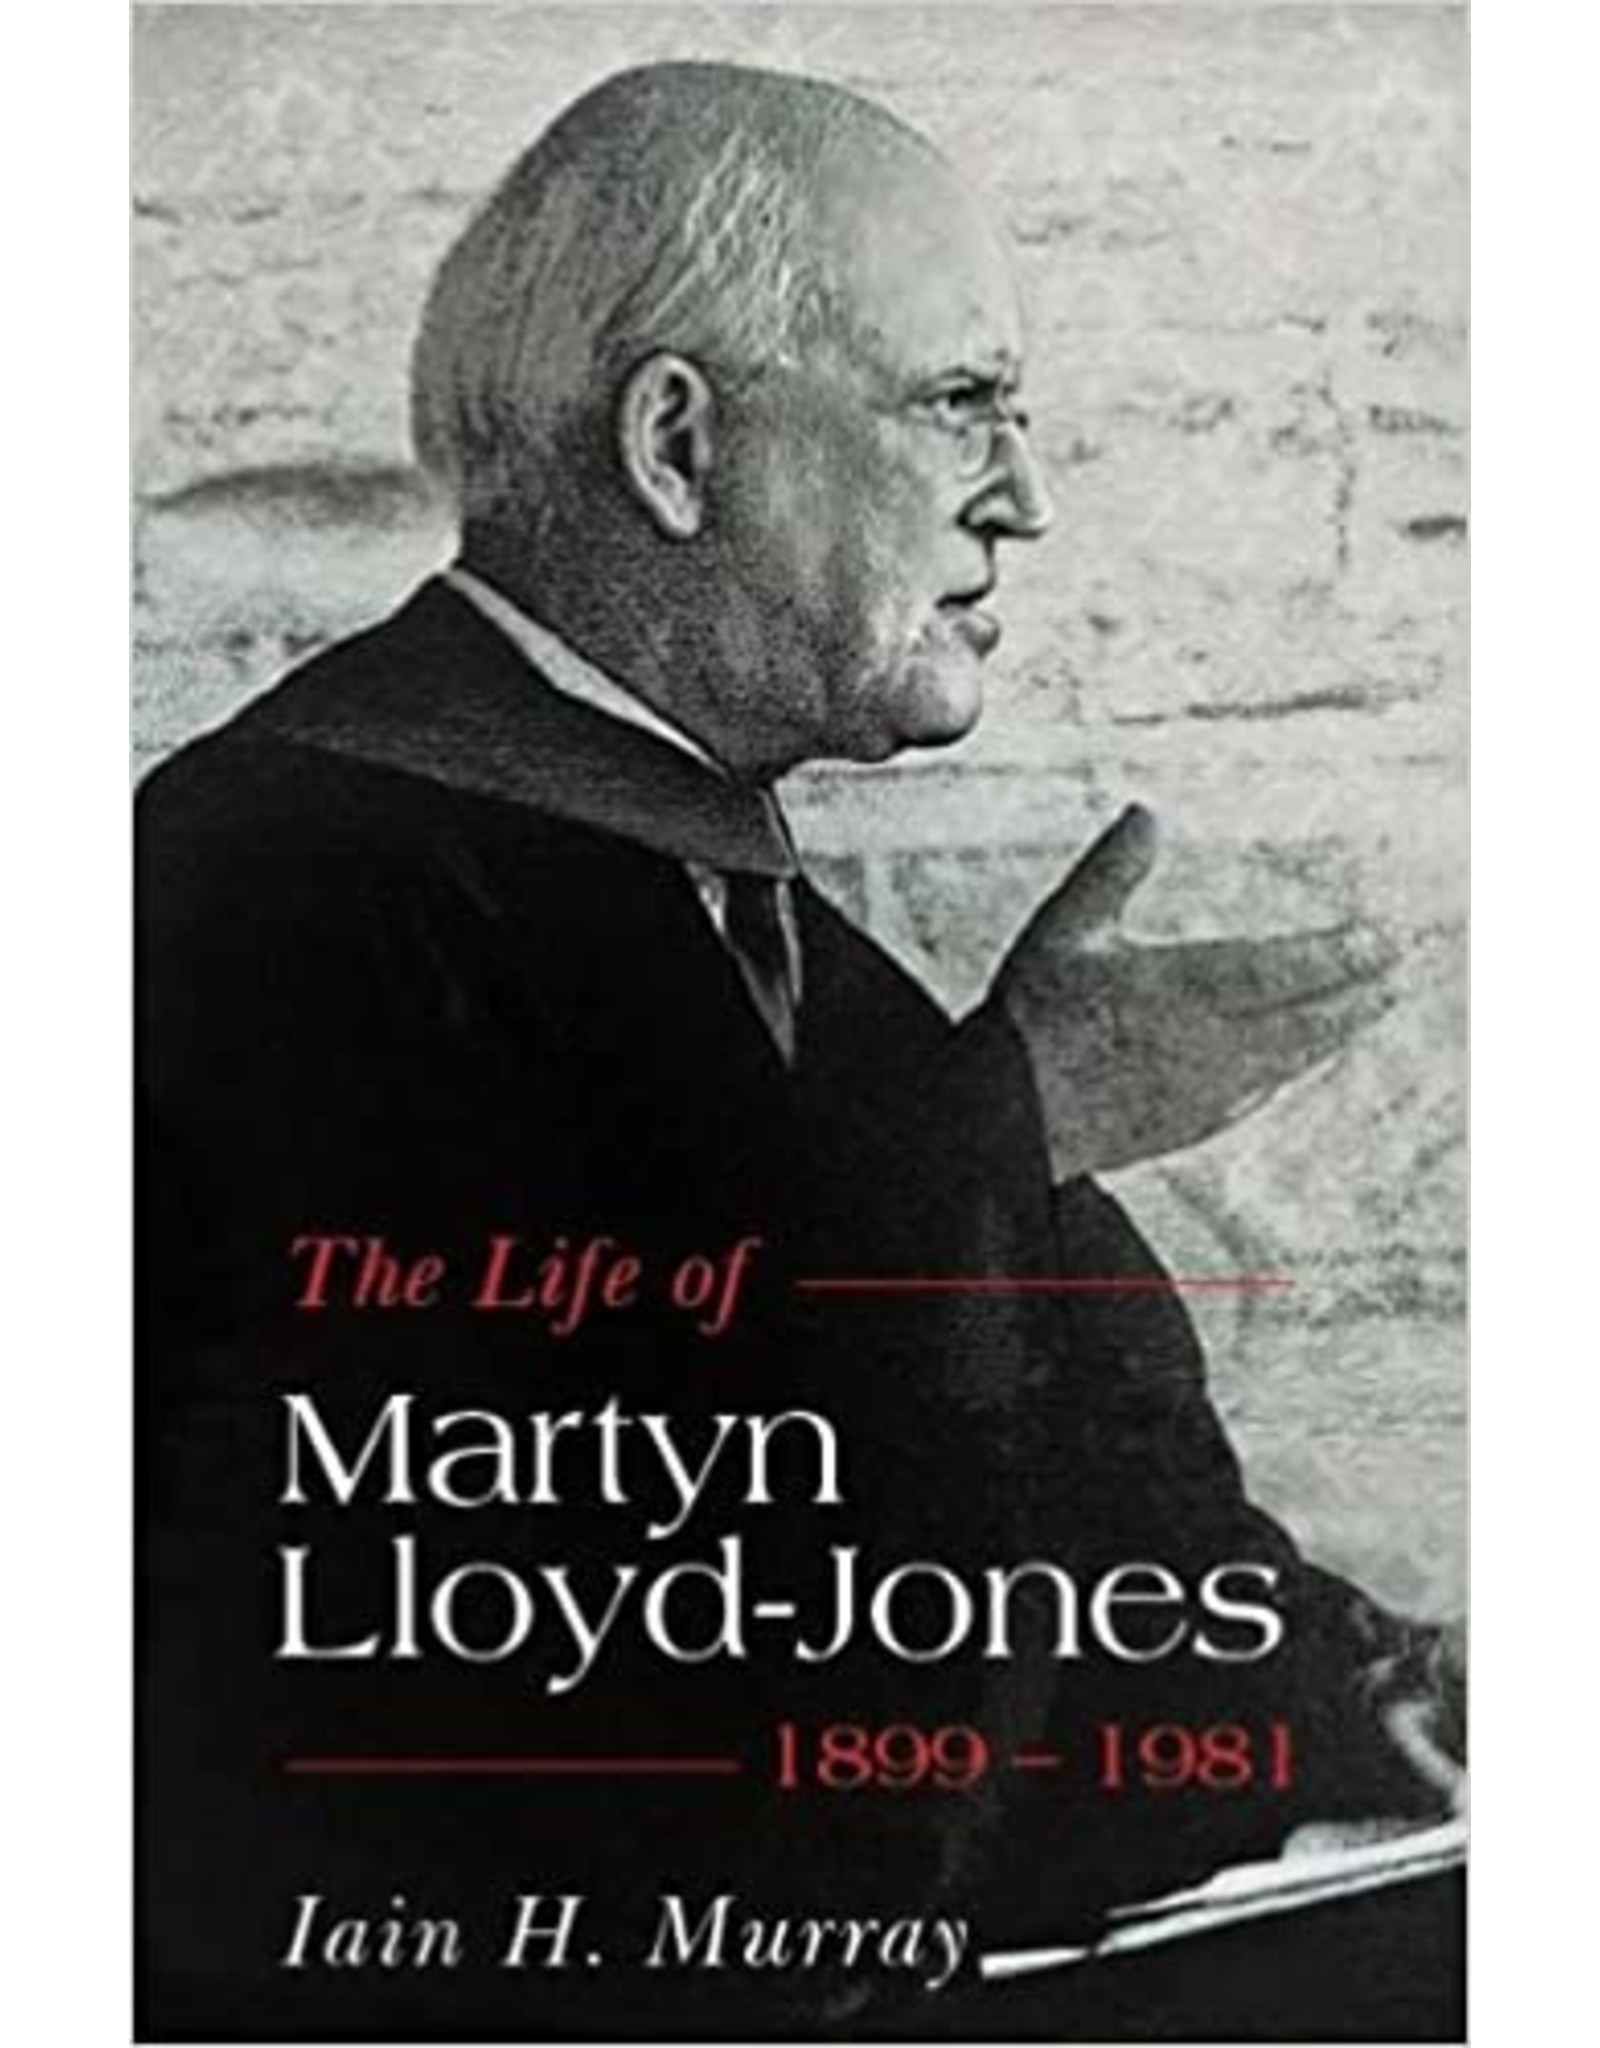 Murray Life of Martyn Lloyd-Jones 1899-1981